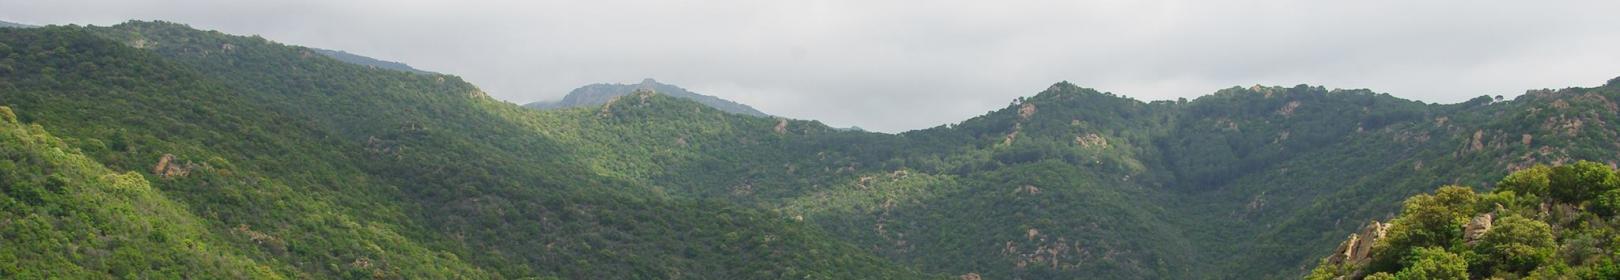 Foresta Pixinamanna dal sentiero Cascata di Sa Spendula (Pula)